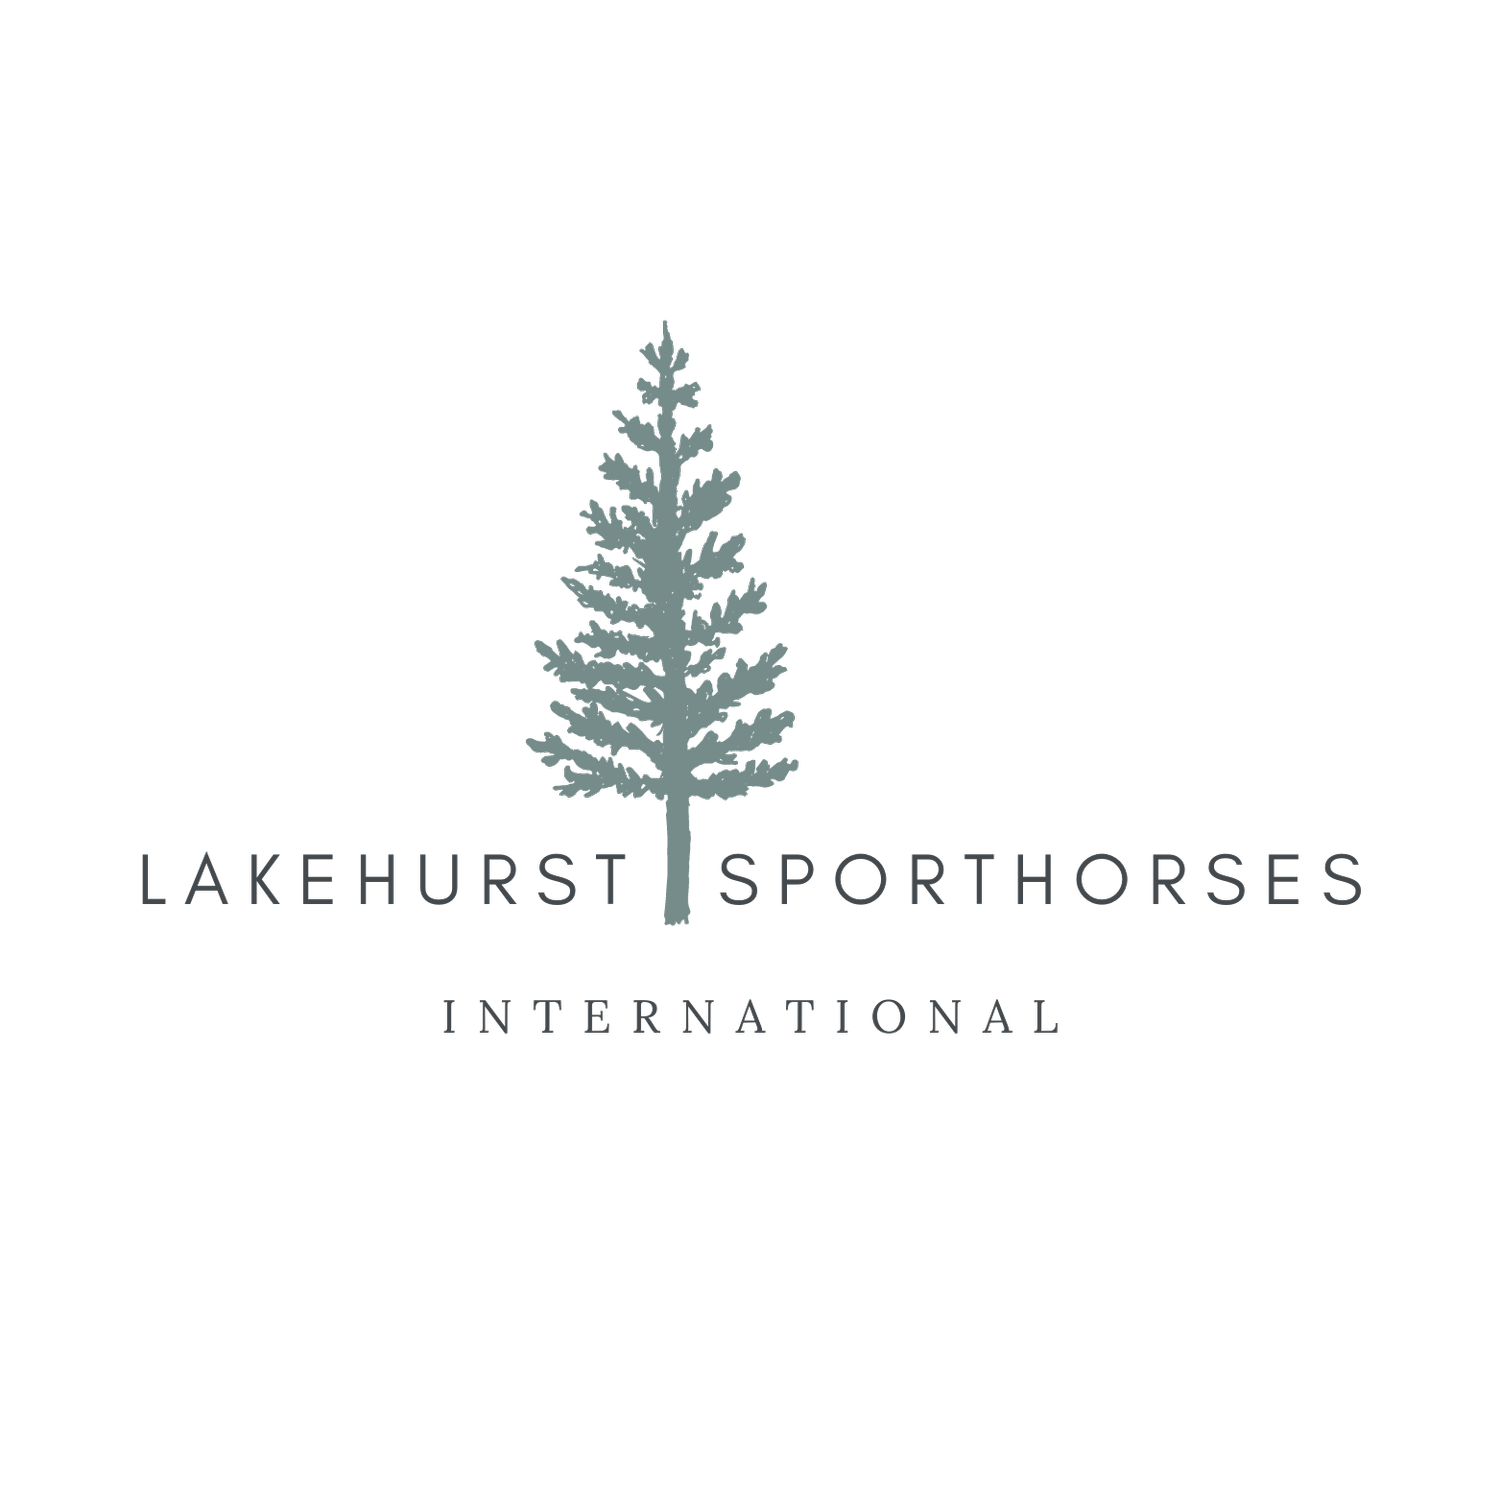 Lakehurst Sporthorses International